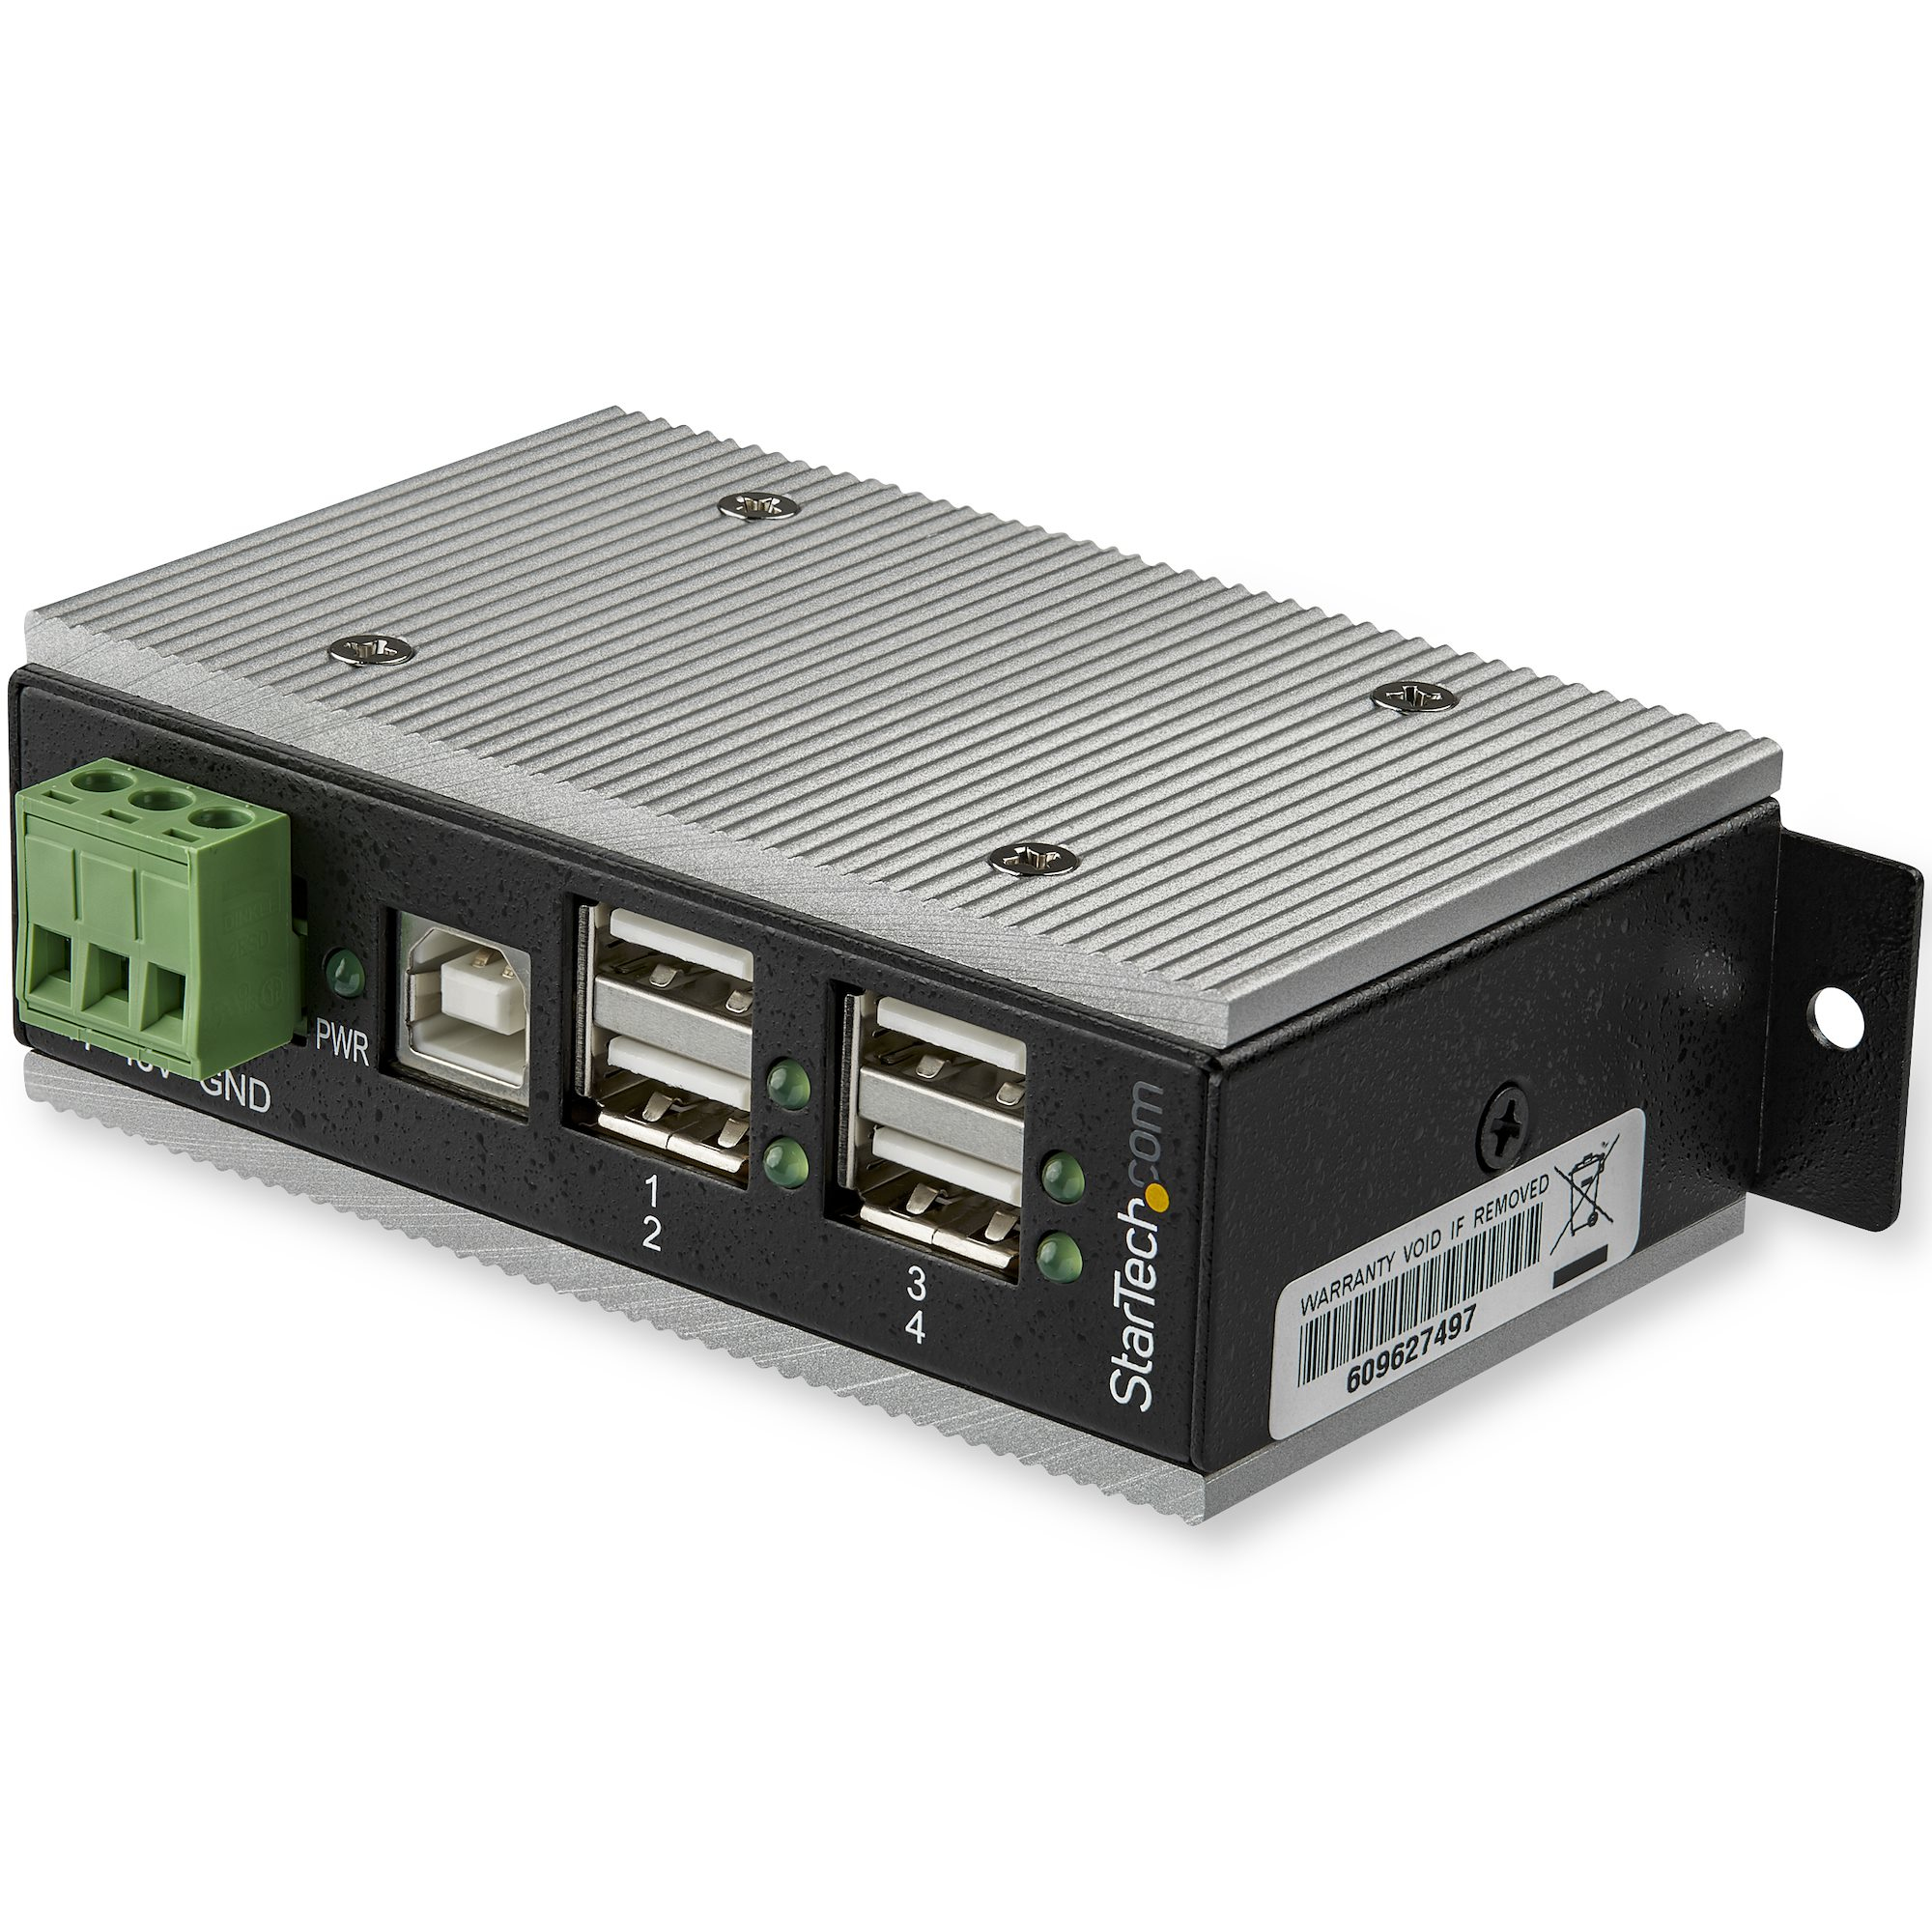 Startech - Io Networking         4-port Industrial Usb Hub - Usb     2.0-15kv Esd Protection Metal       Hb20a4ame